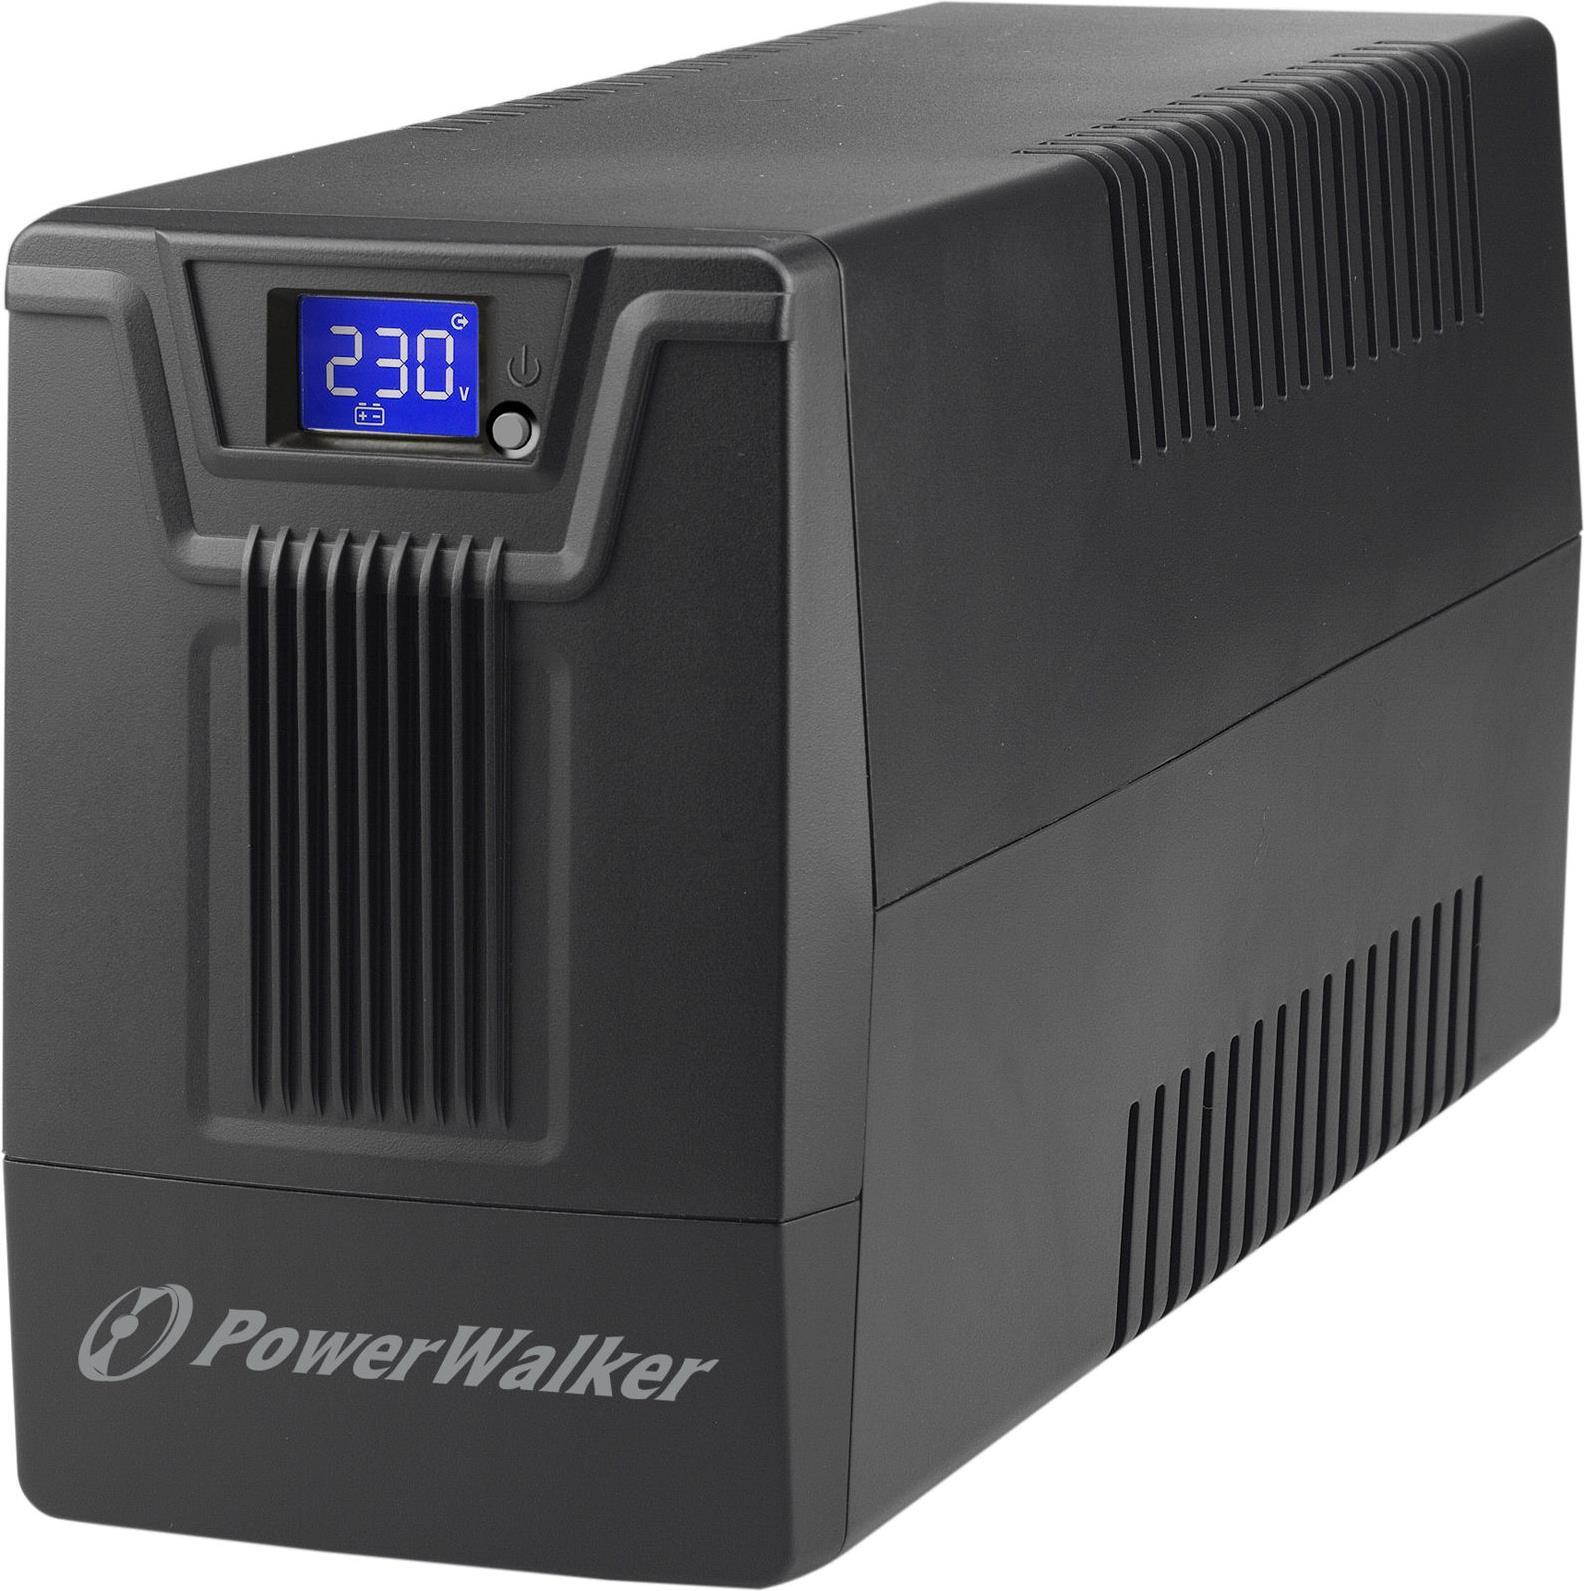 Bluewalker PowerWalker VI 800 SCL (10121140)